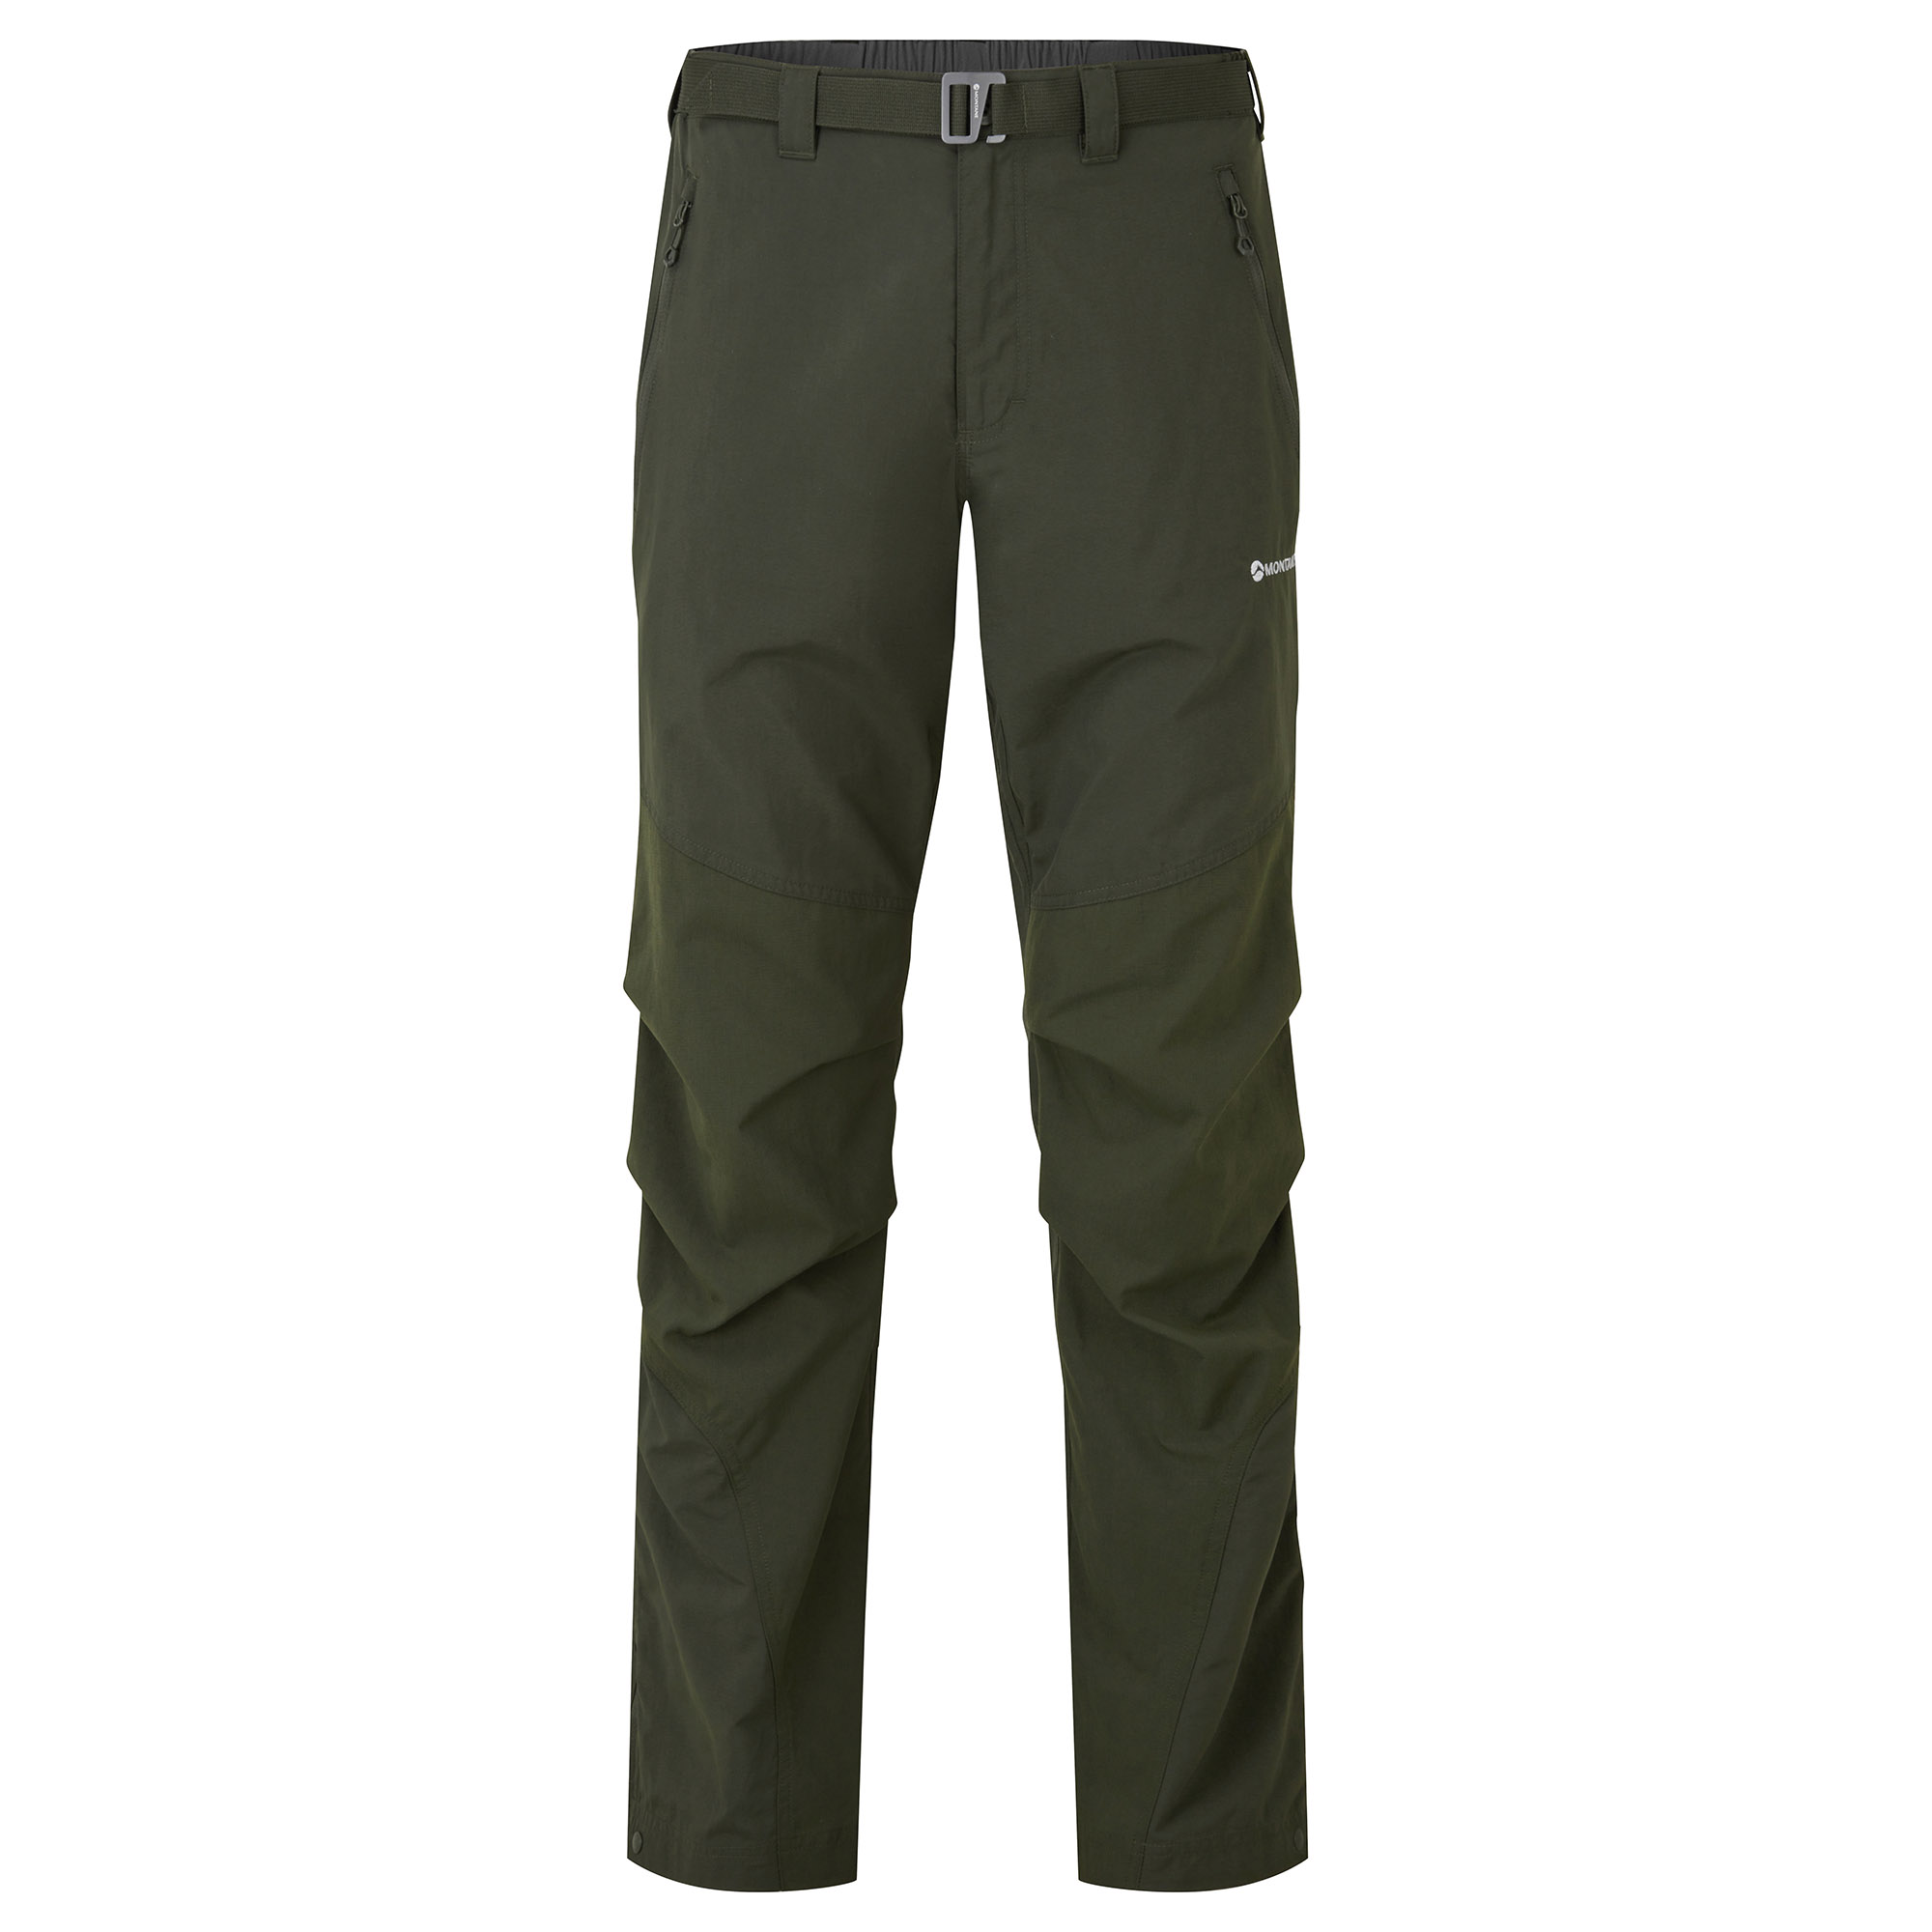 Montane pánské softshellové kalhoty Terra Pants - Běžná Délka Barva: Oak Green, Velikost: 34